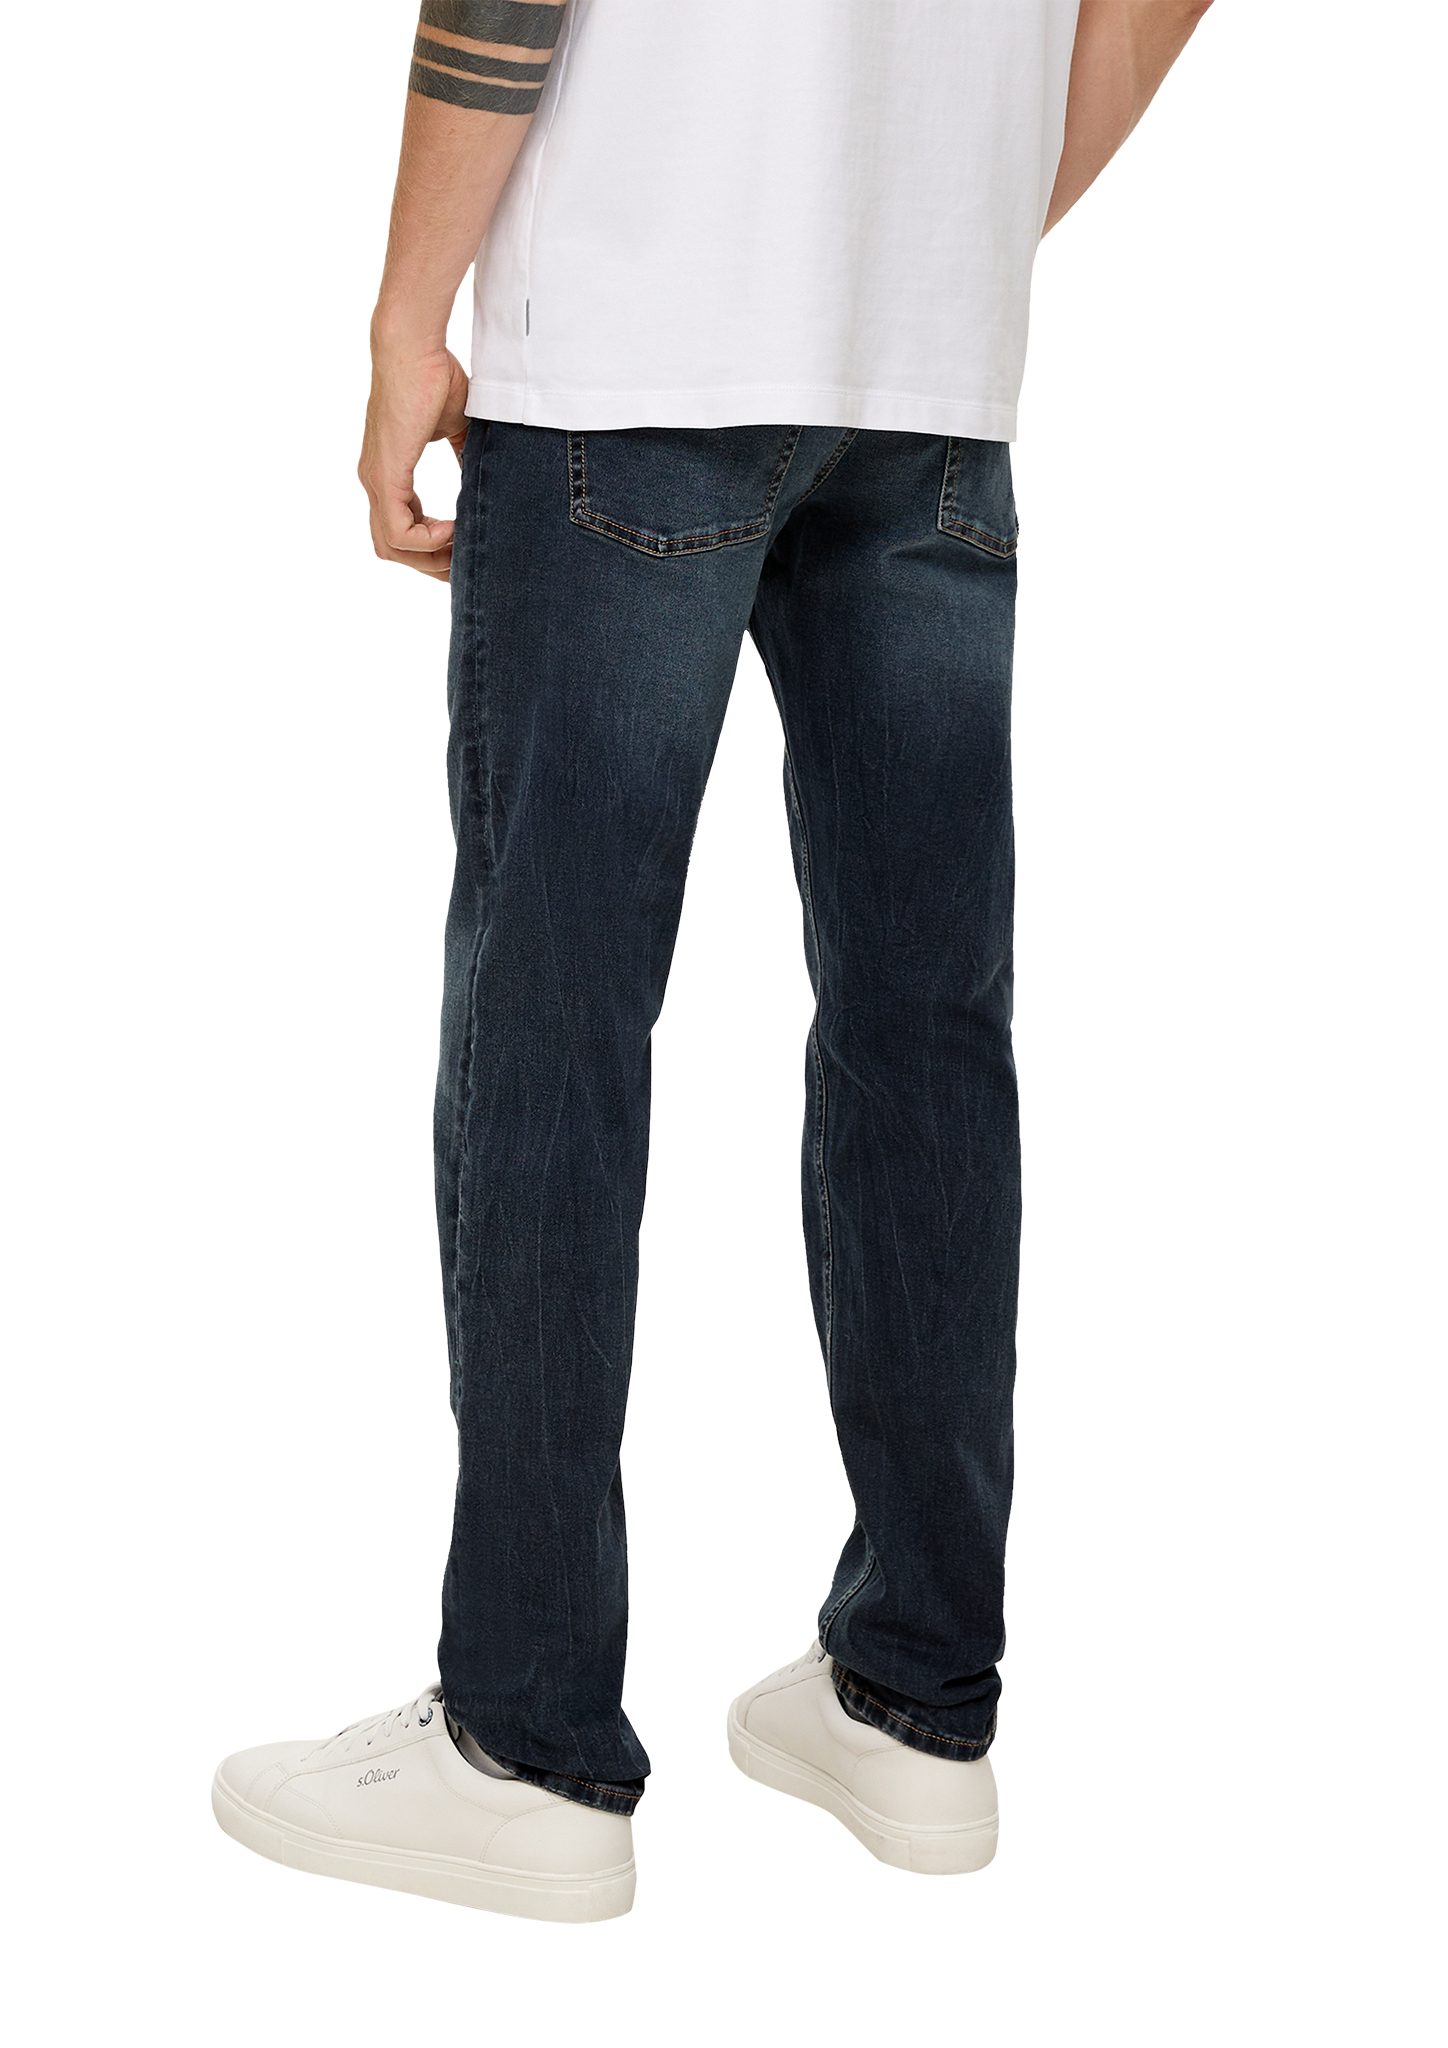 Slim Fit Rise dunkelblau Jeans / Slim / Leg s.Oliver / Label-Patch, Mid Stoffhose Destroyes Nelio